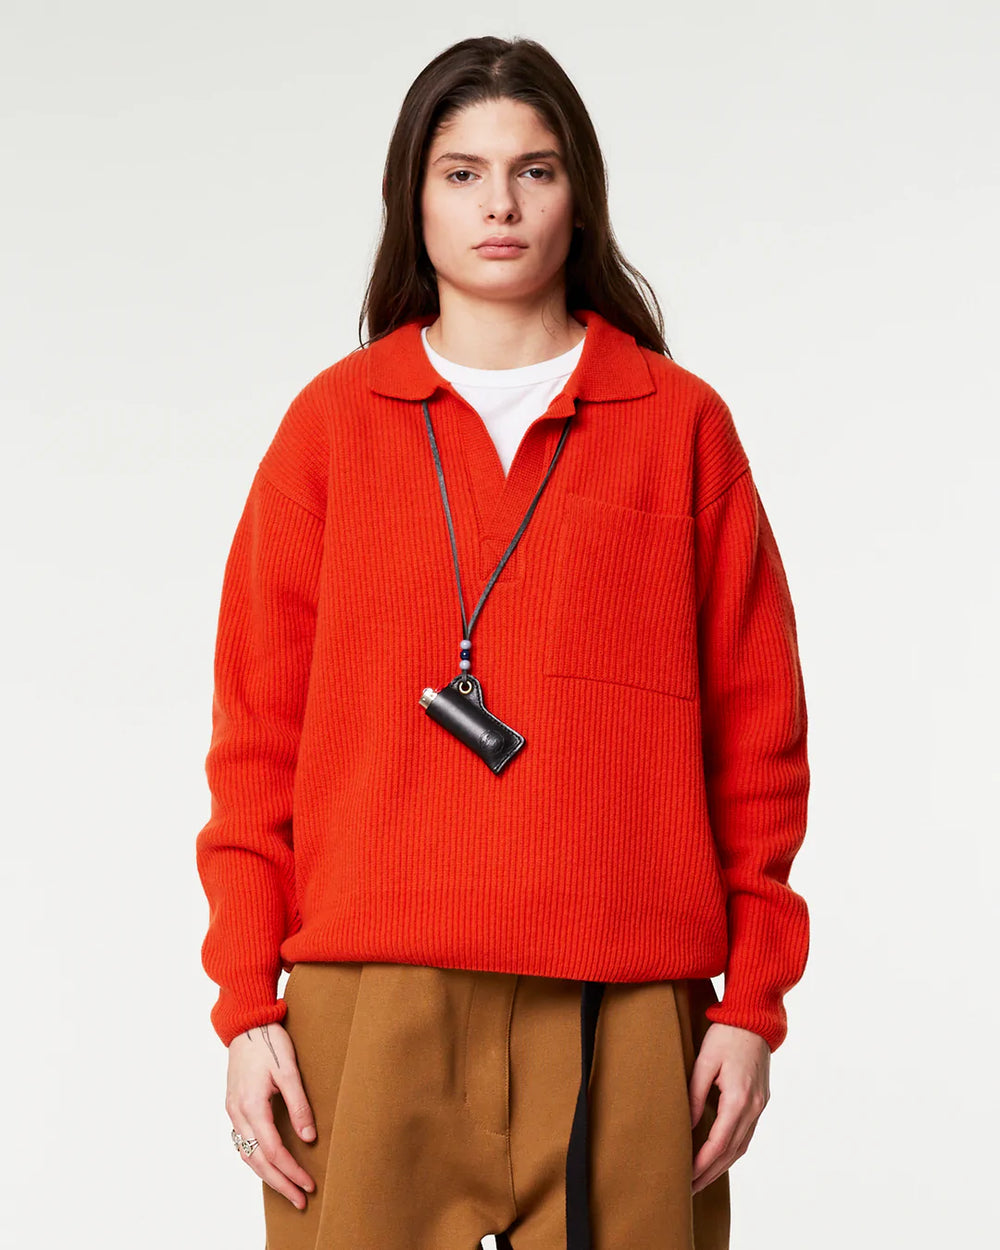 Rugby Sweater - Wool - Orange